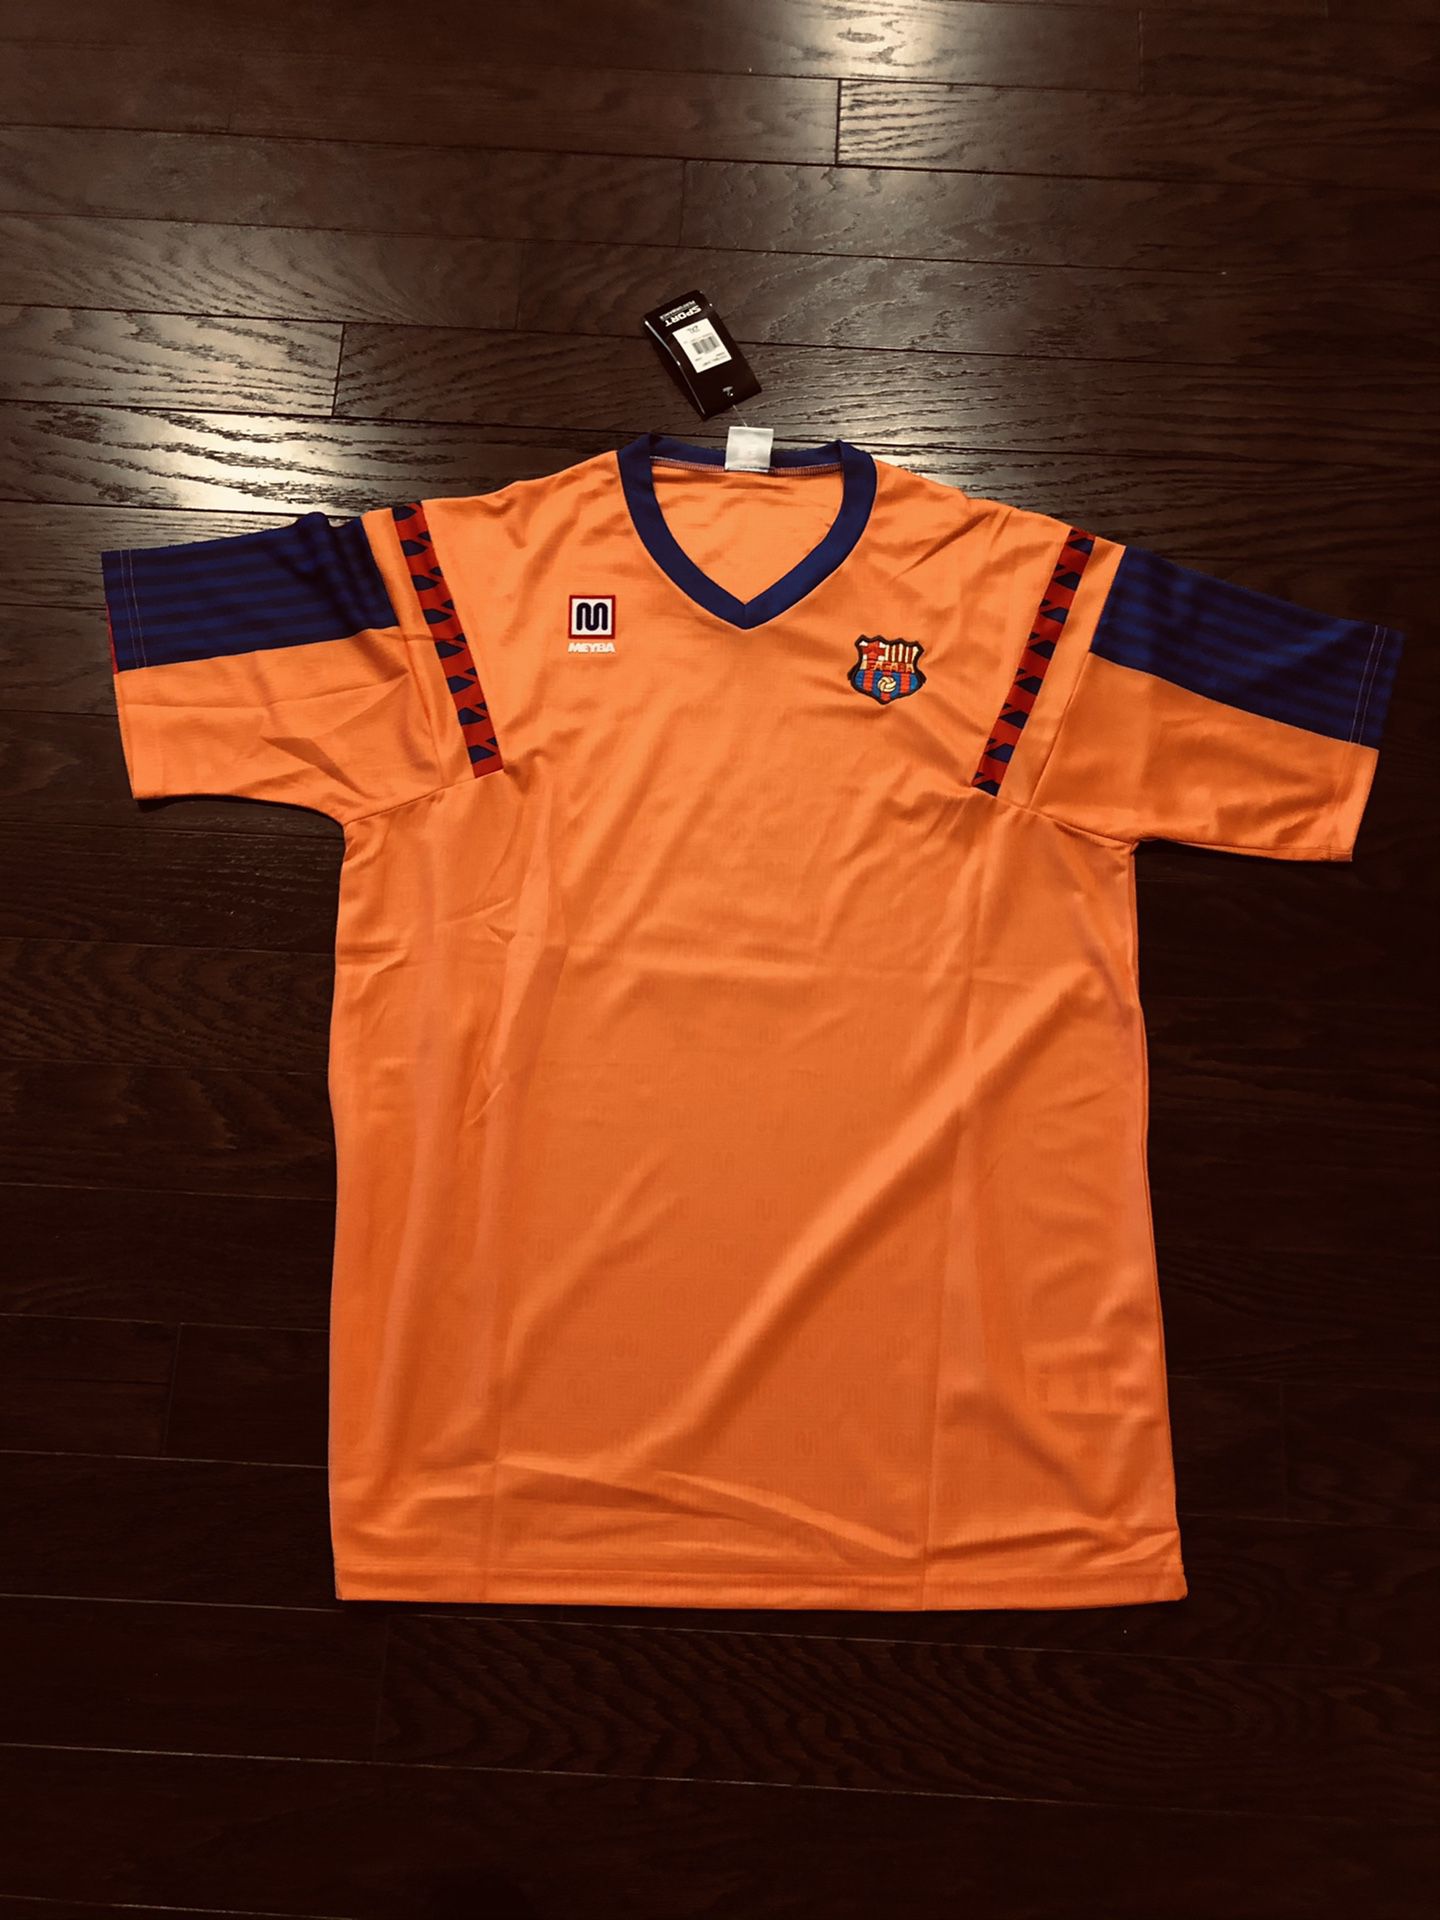 Barcelona’90 jersey